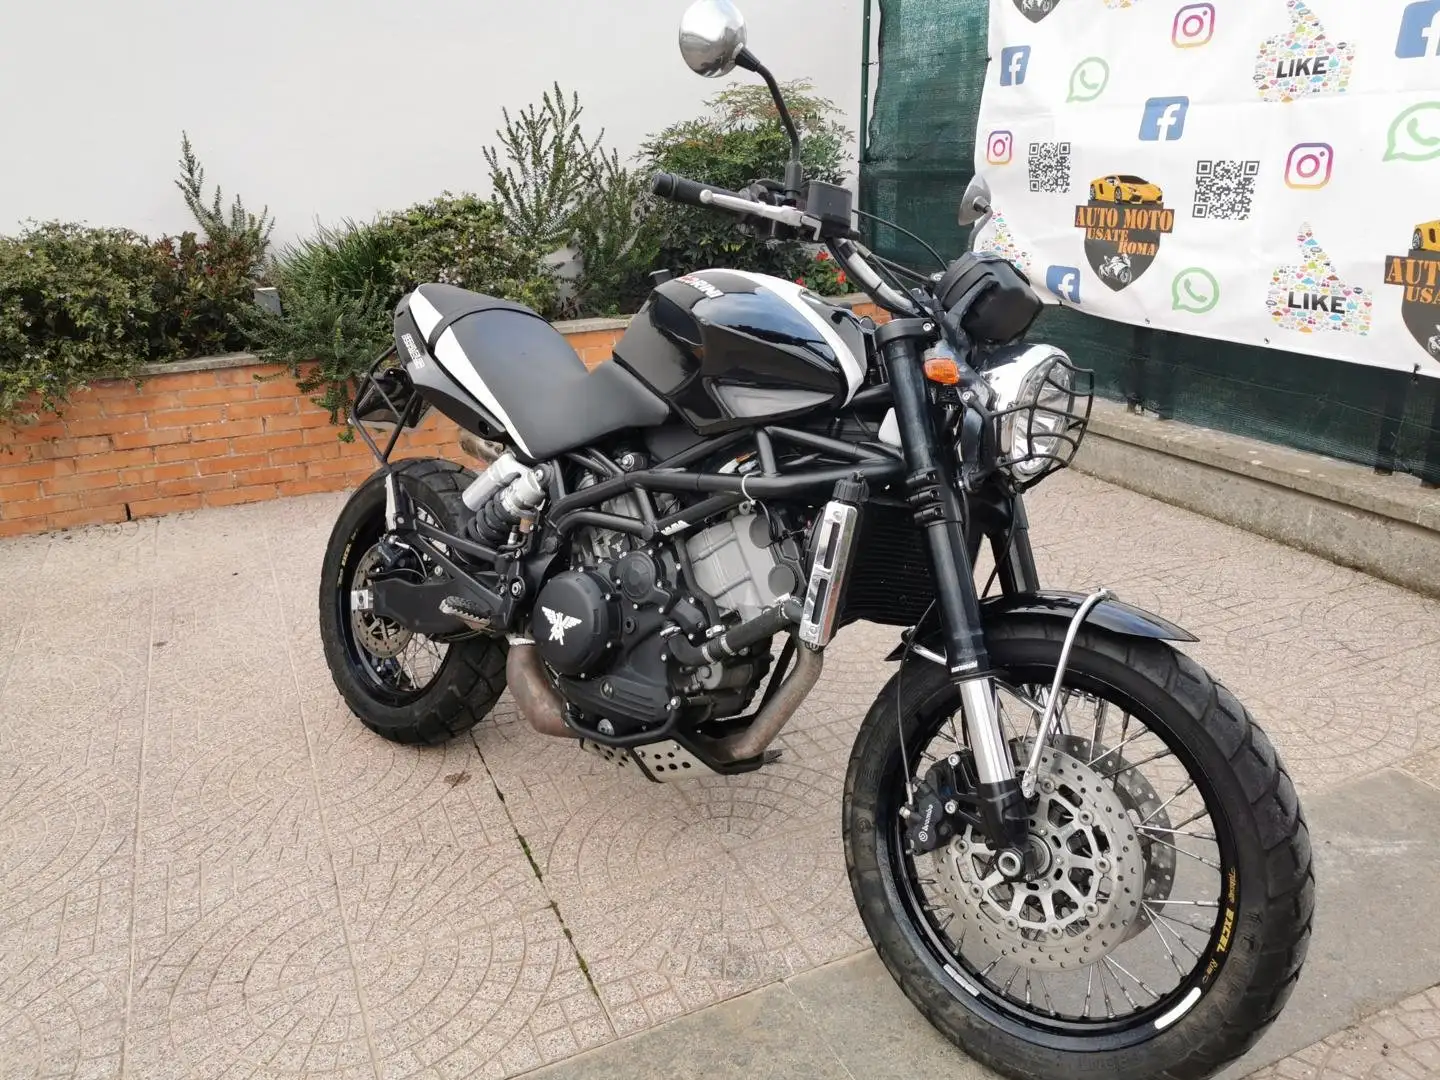 Moto Morini Scrambler 1200 usata a Marino- Rm per € 4.900,-